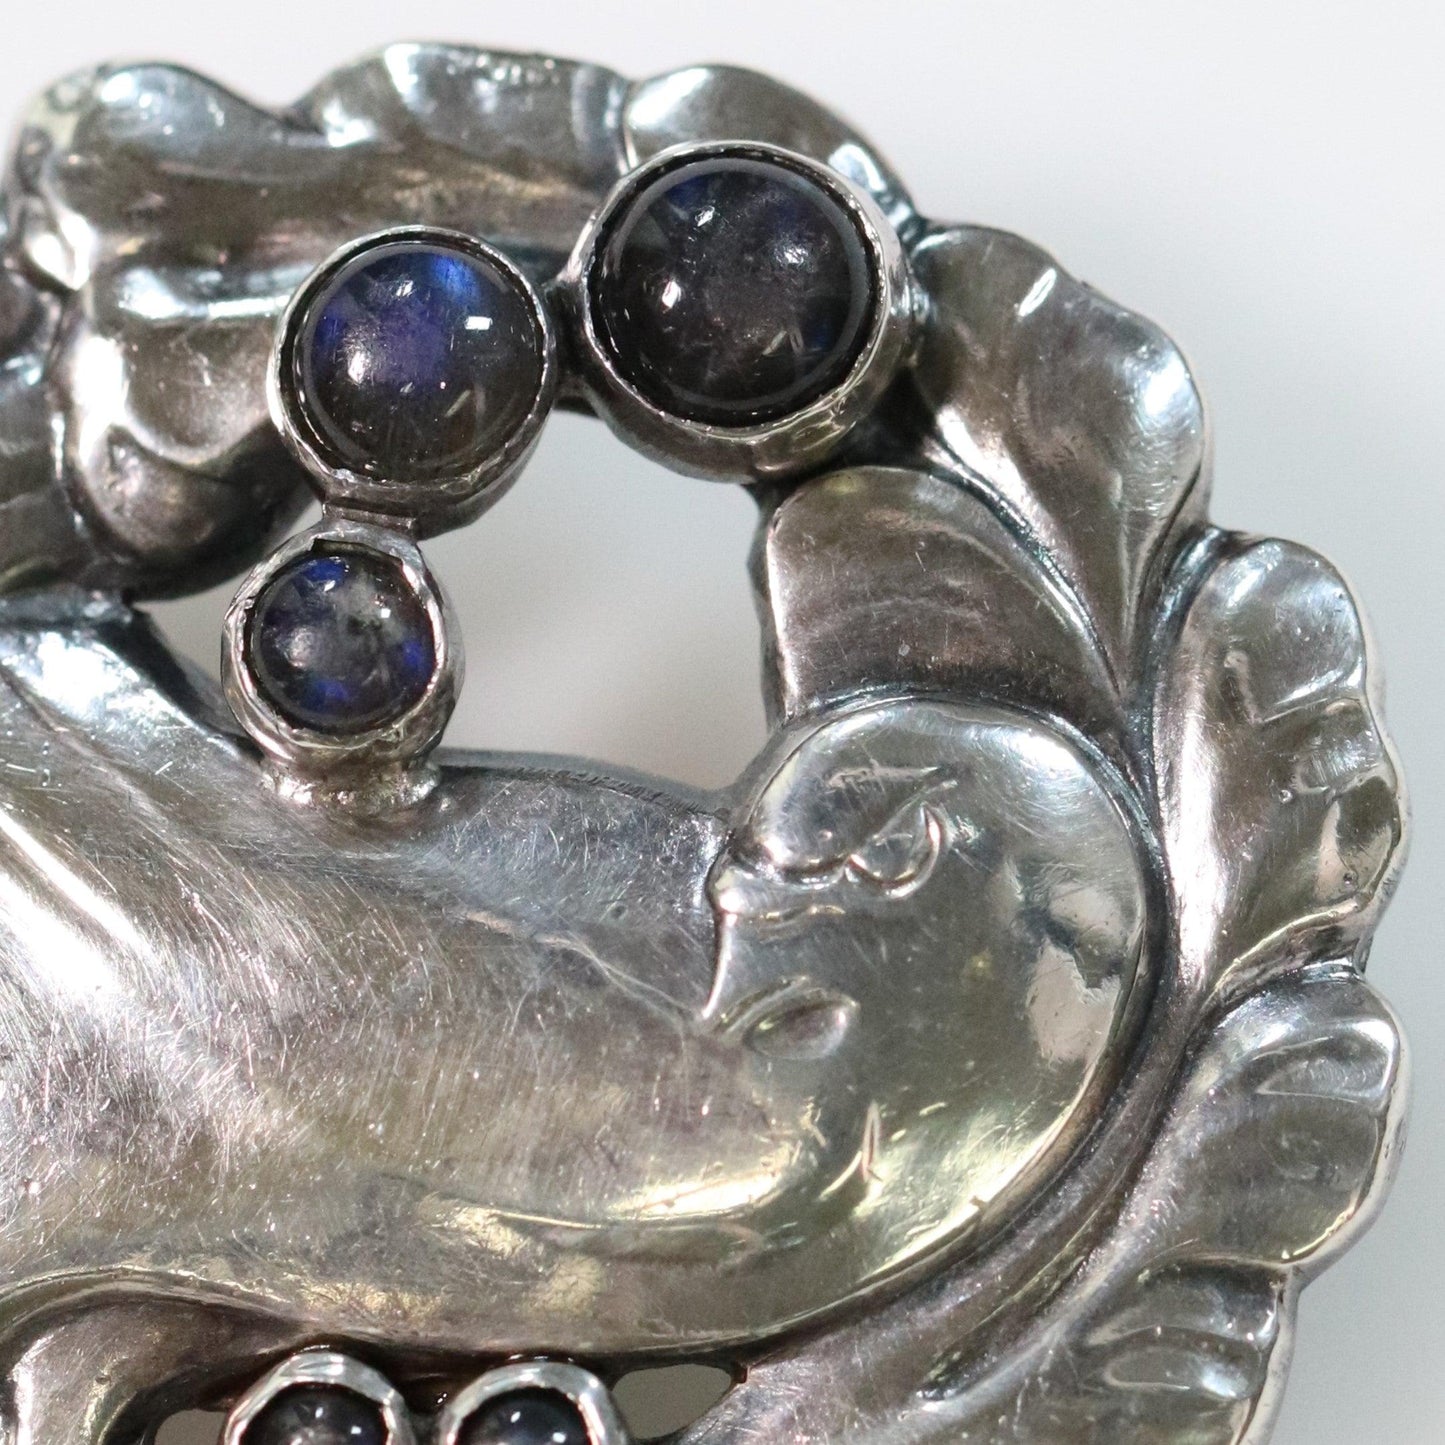 Vintage Georg Jensen Jewelry | Antique Labrodorite Dove Brooch 165 - Carmel Fine Silver Jewelry